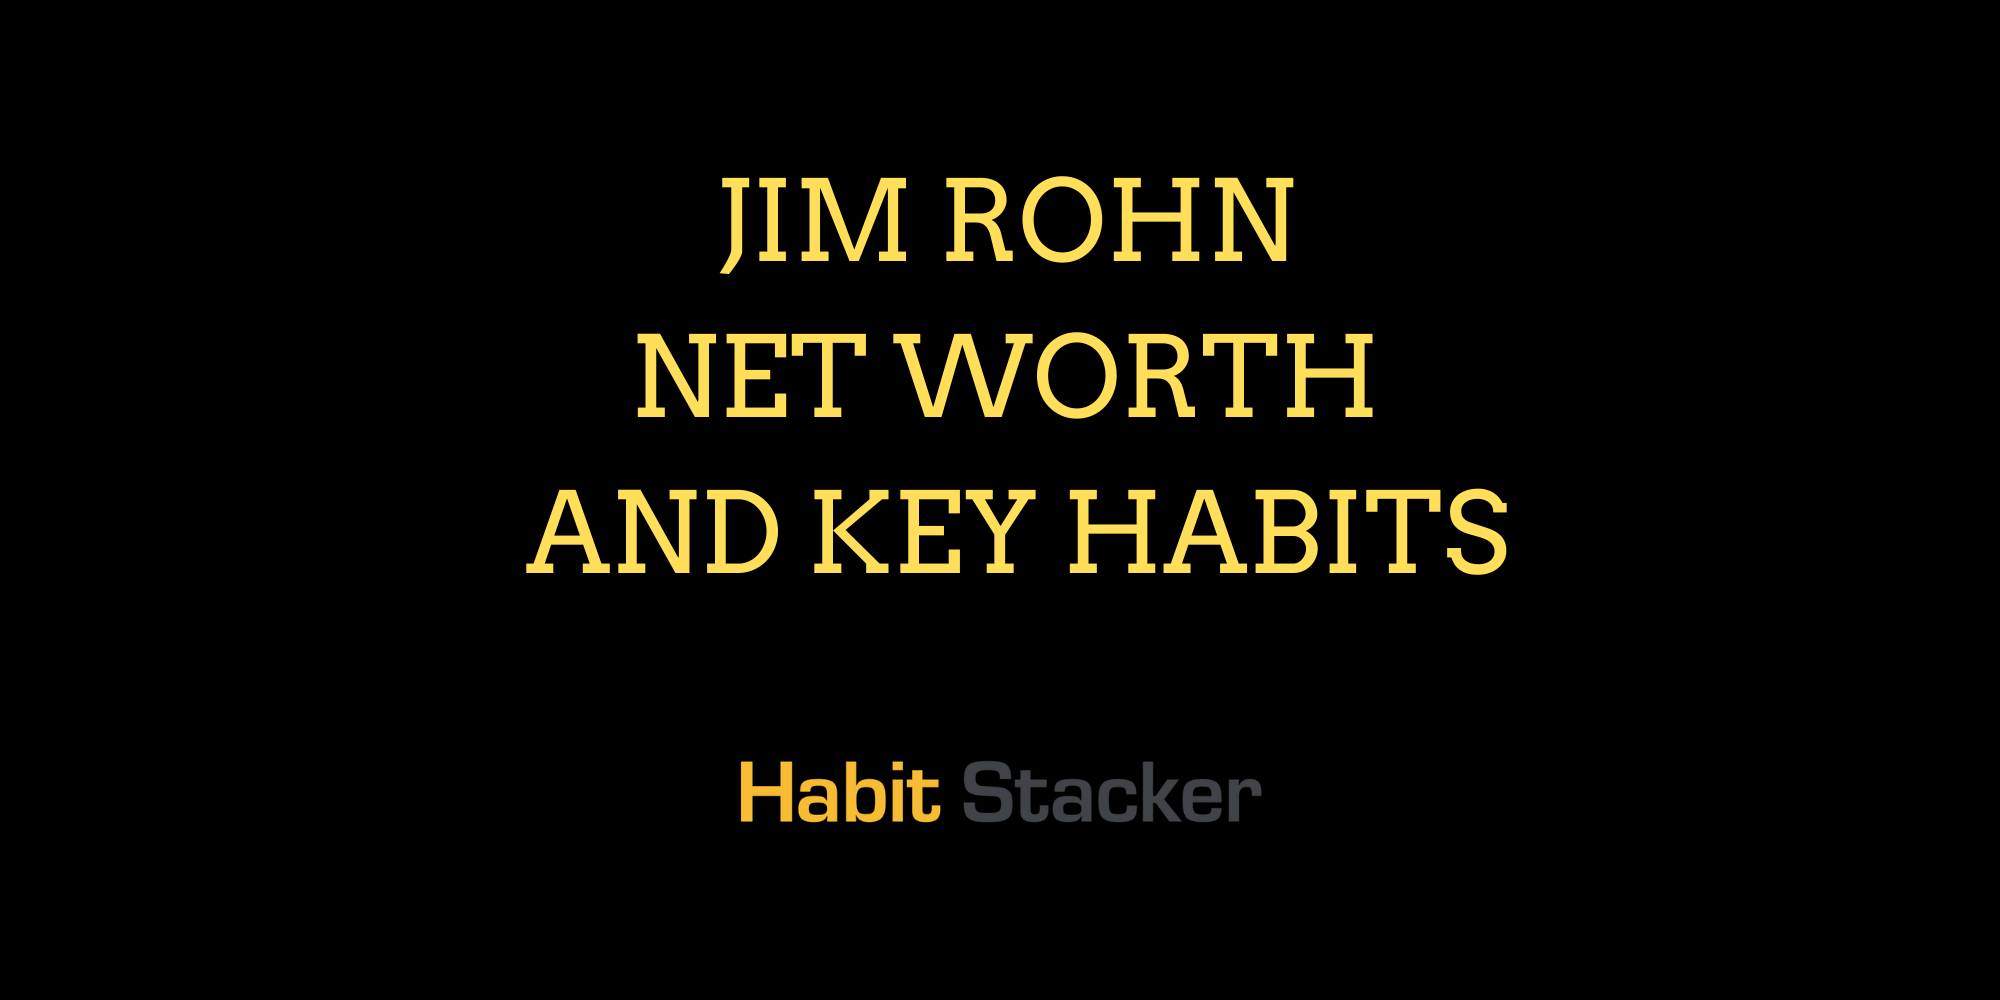 Jim Rohn Net Worth and Key Habits